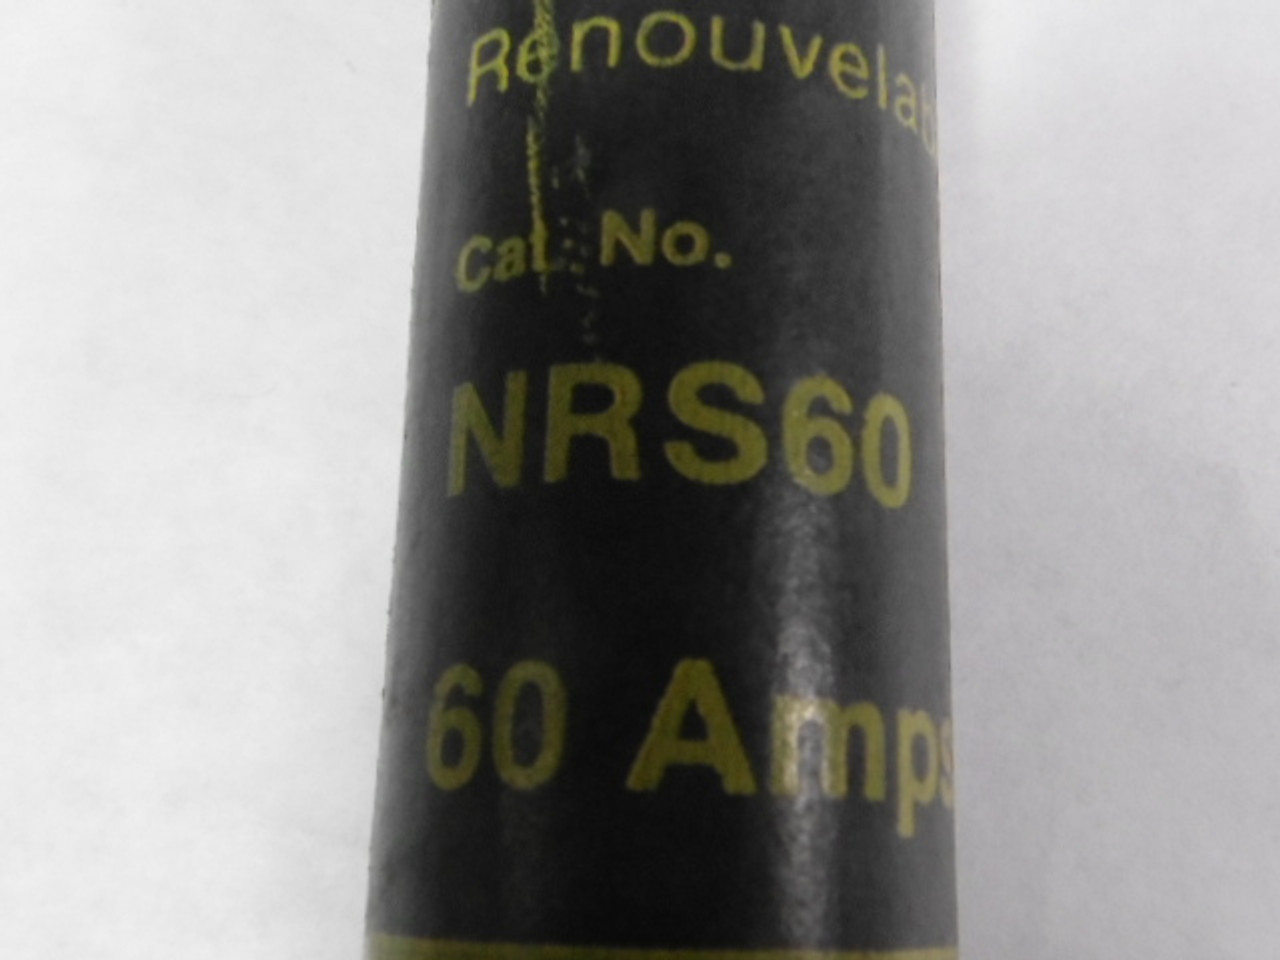 Gould Shawmut NRS-60 Fuse 60A 600V AC USED